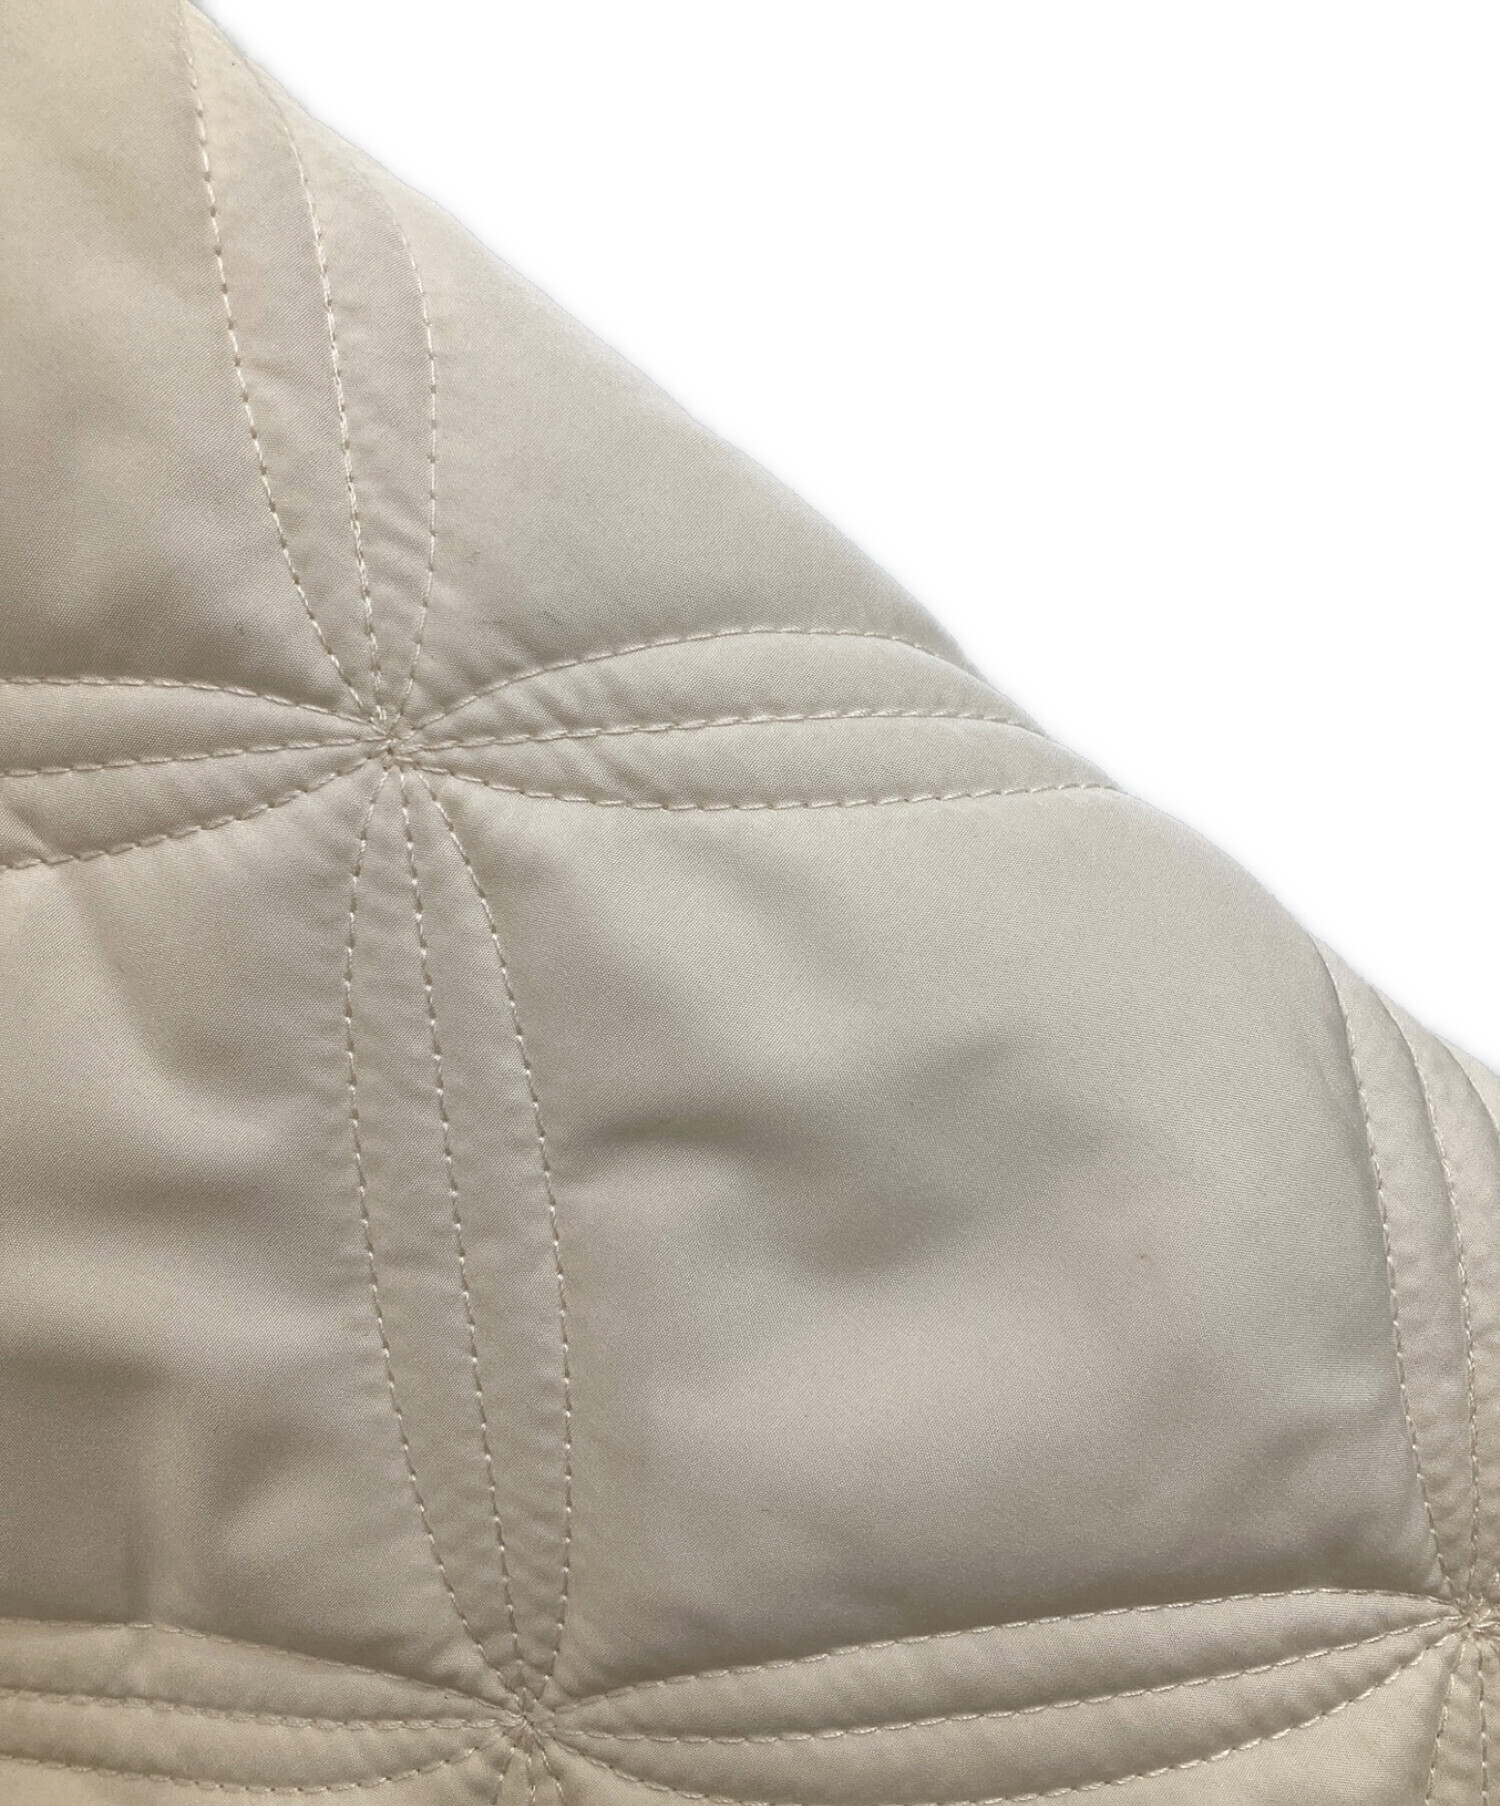 Amiur (エミレ) big collar quilting jacket ホワイト サイズ:F